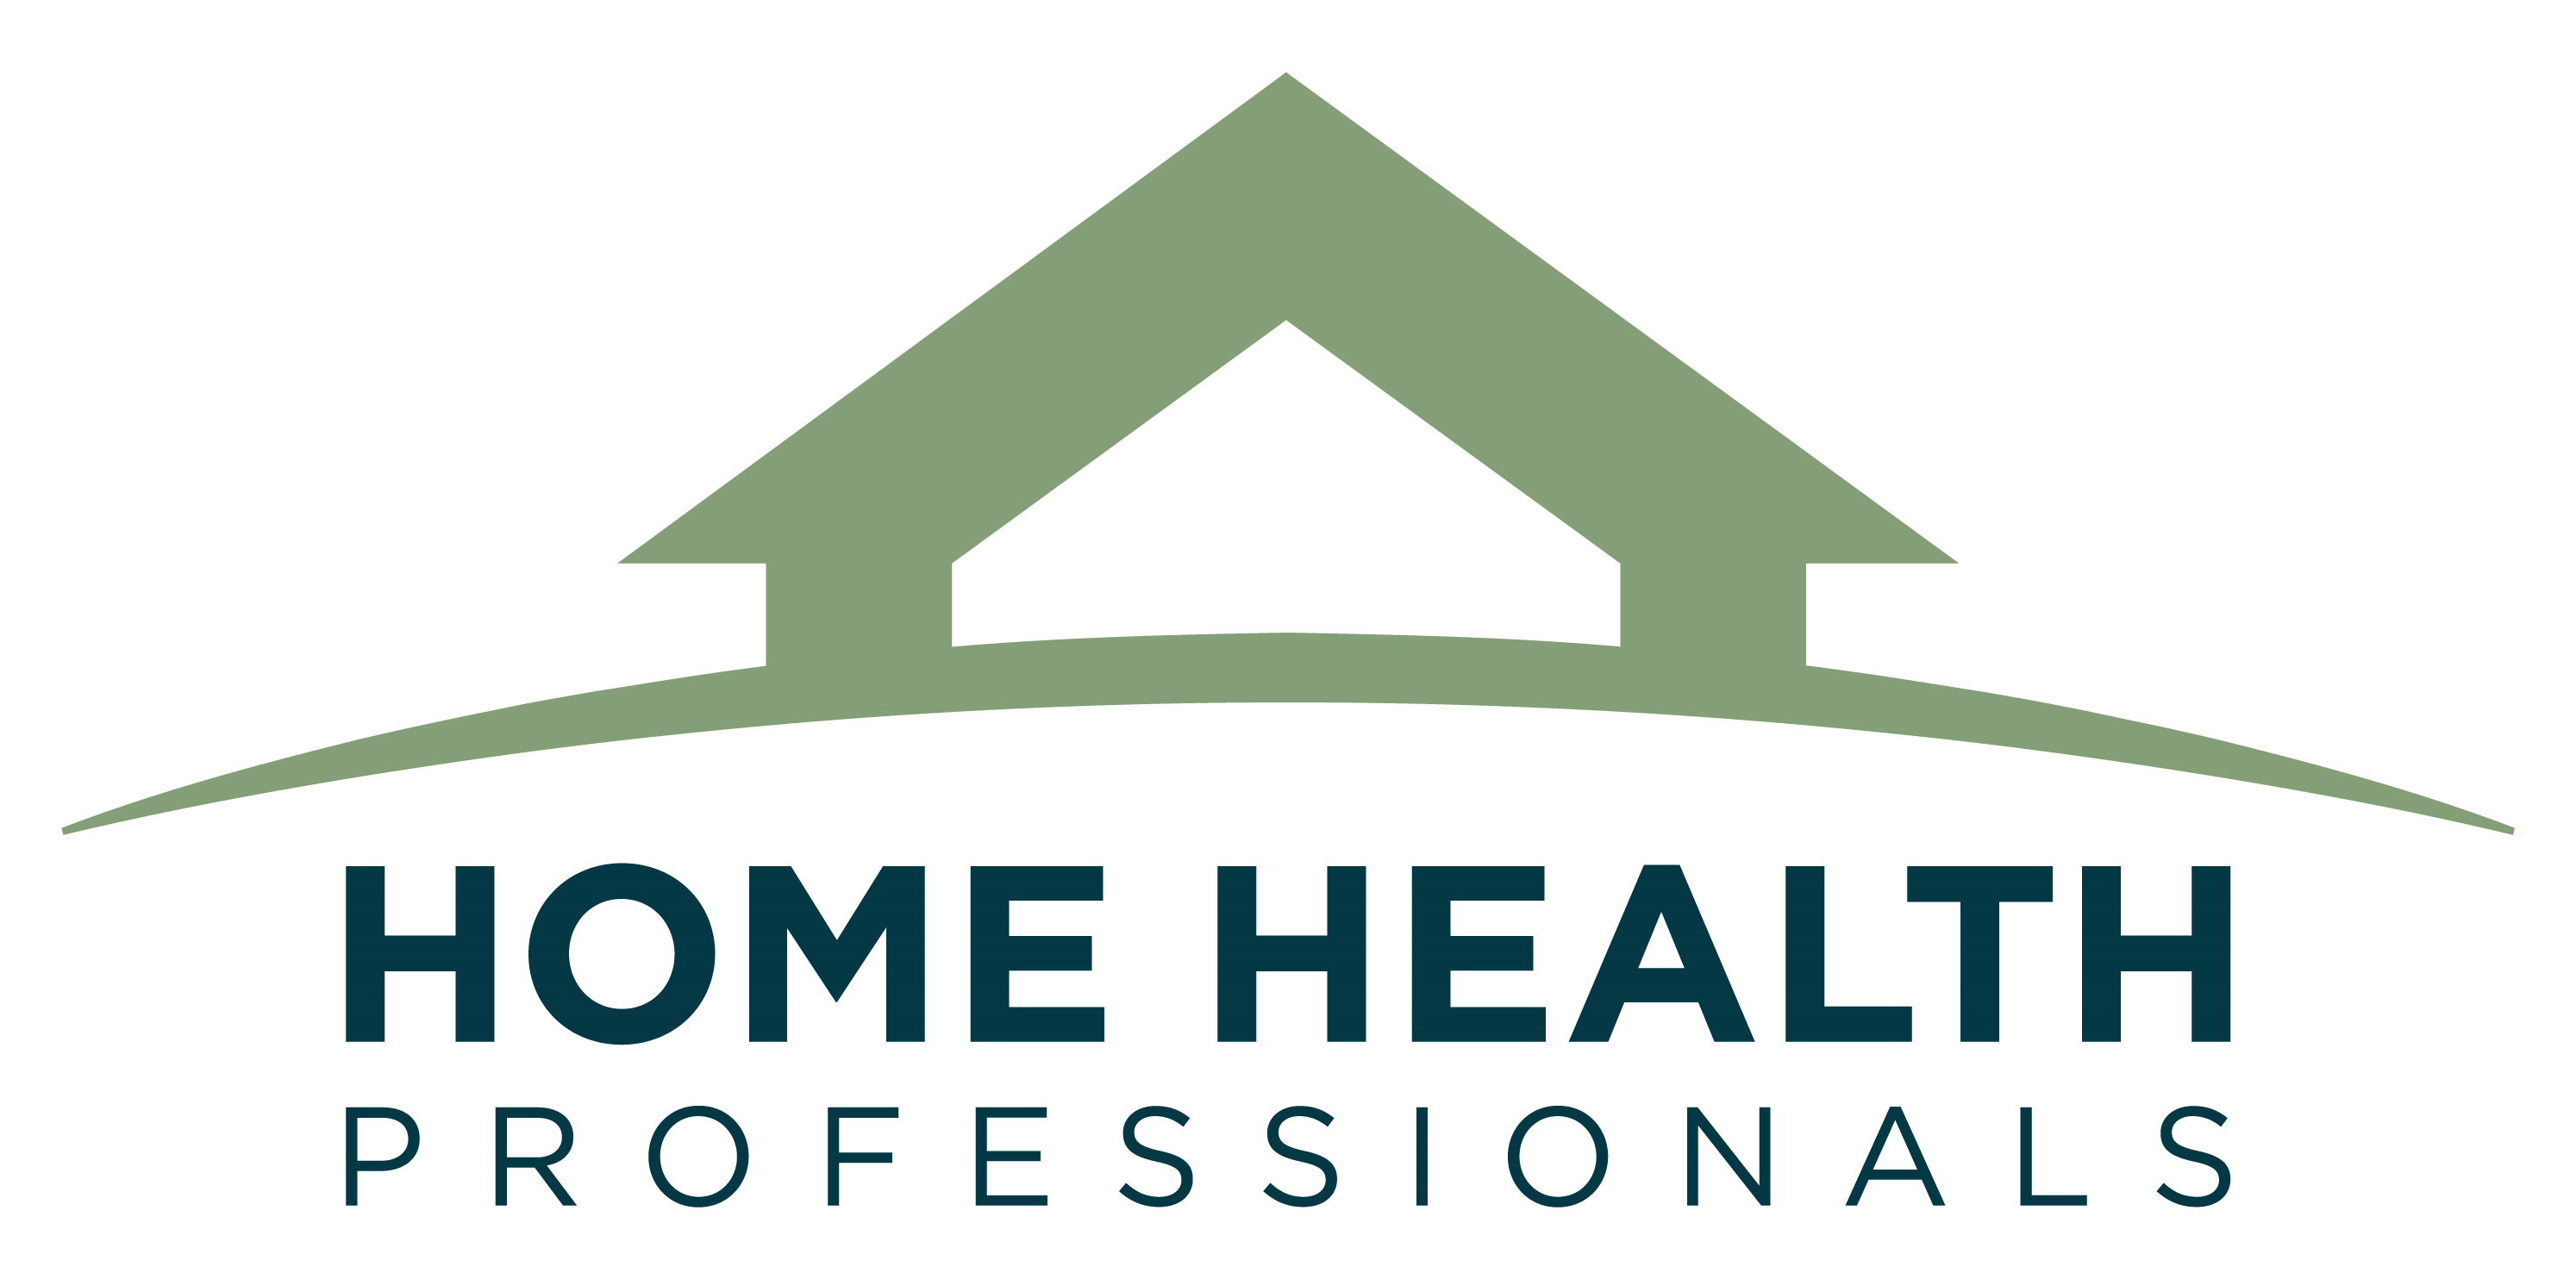 Home Health Professionals logo